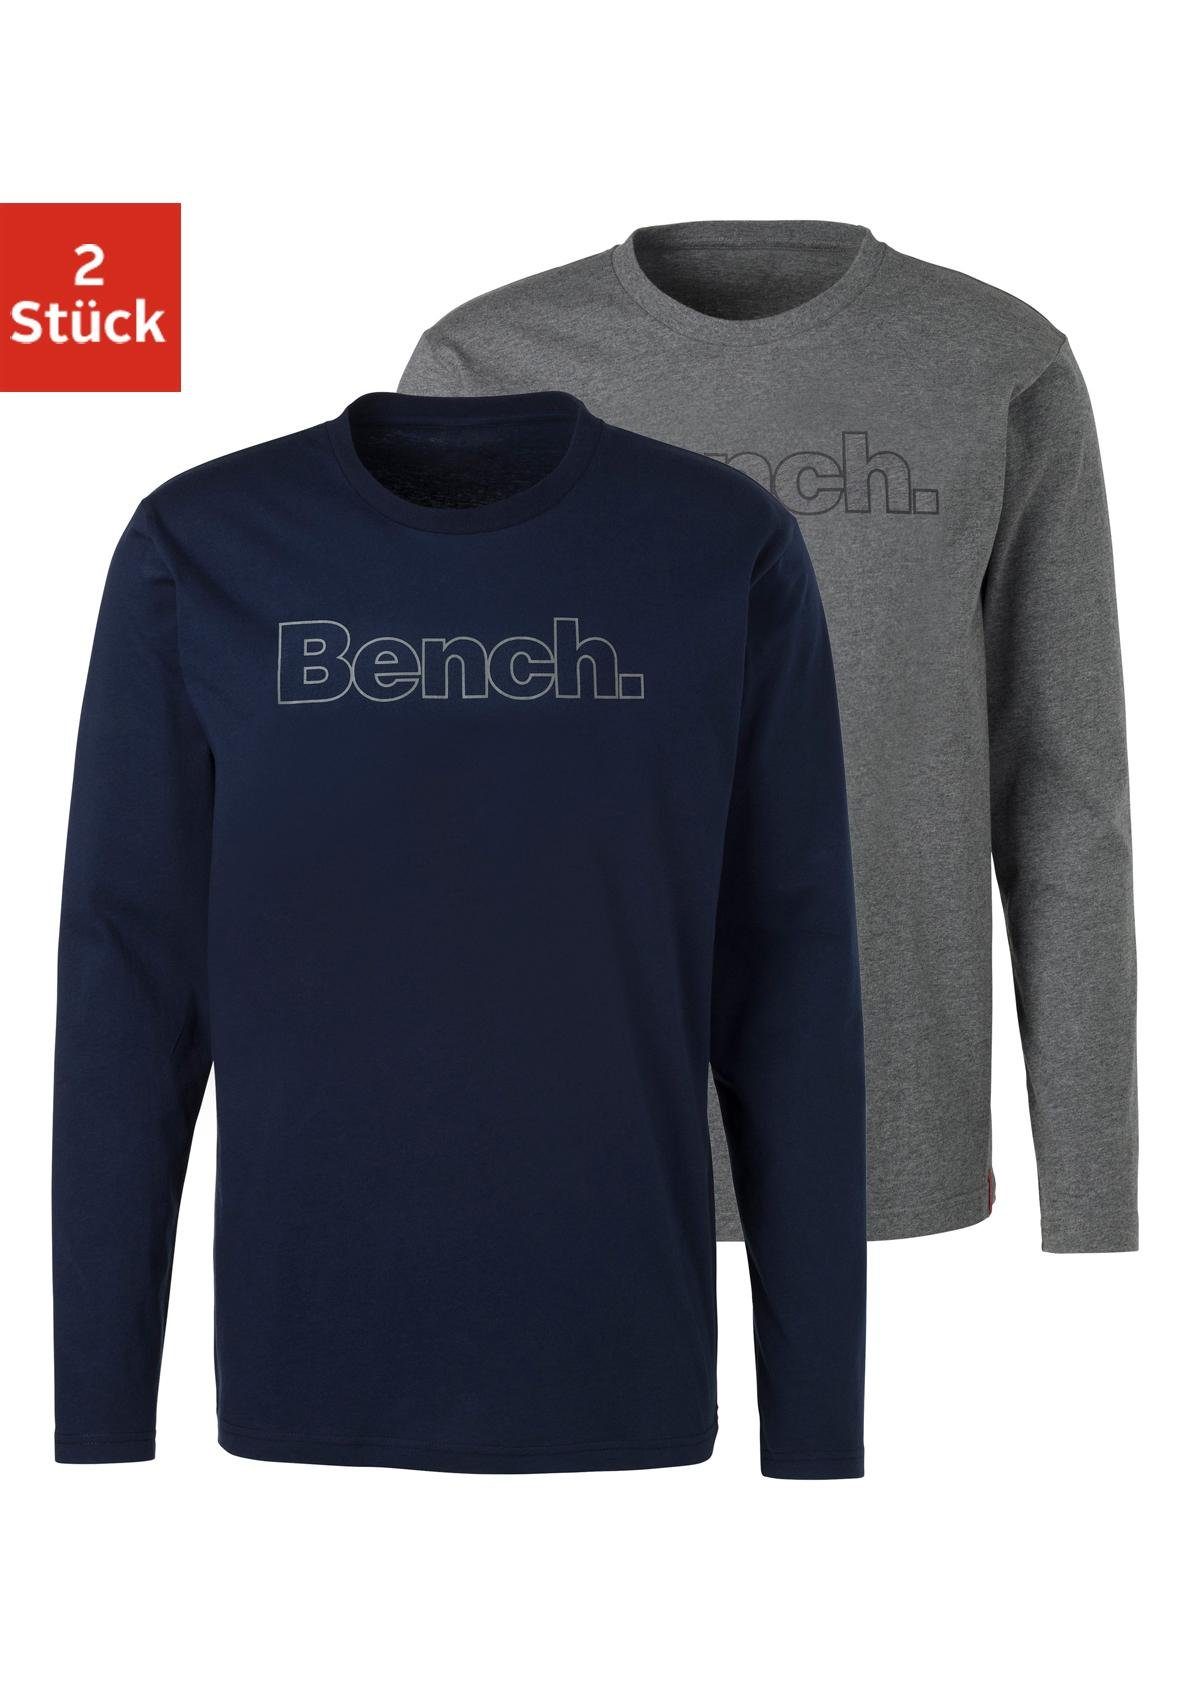 Bench. Loungewear grau-meliert navy, (2-tlg) Bench. Langarmshirt Print mit vorn